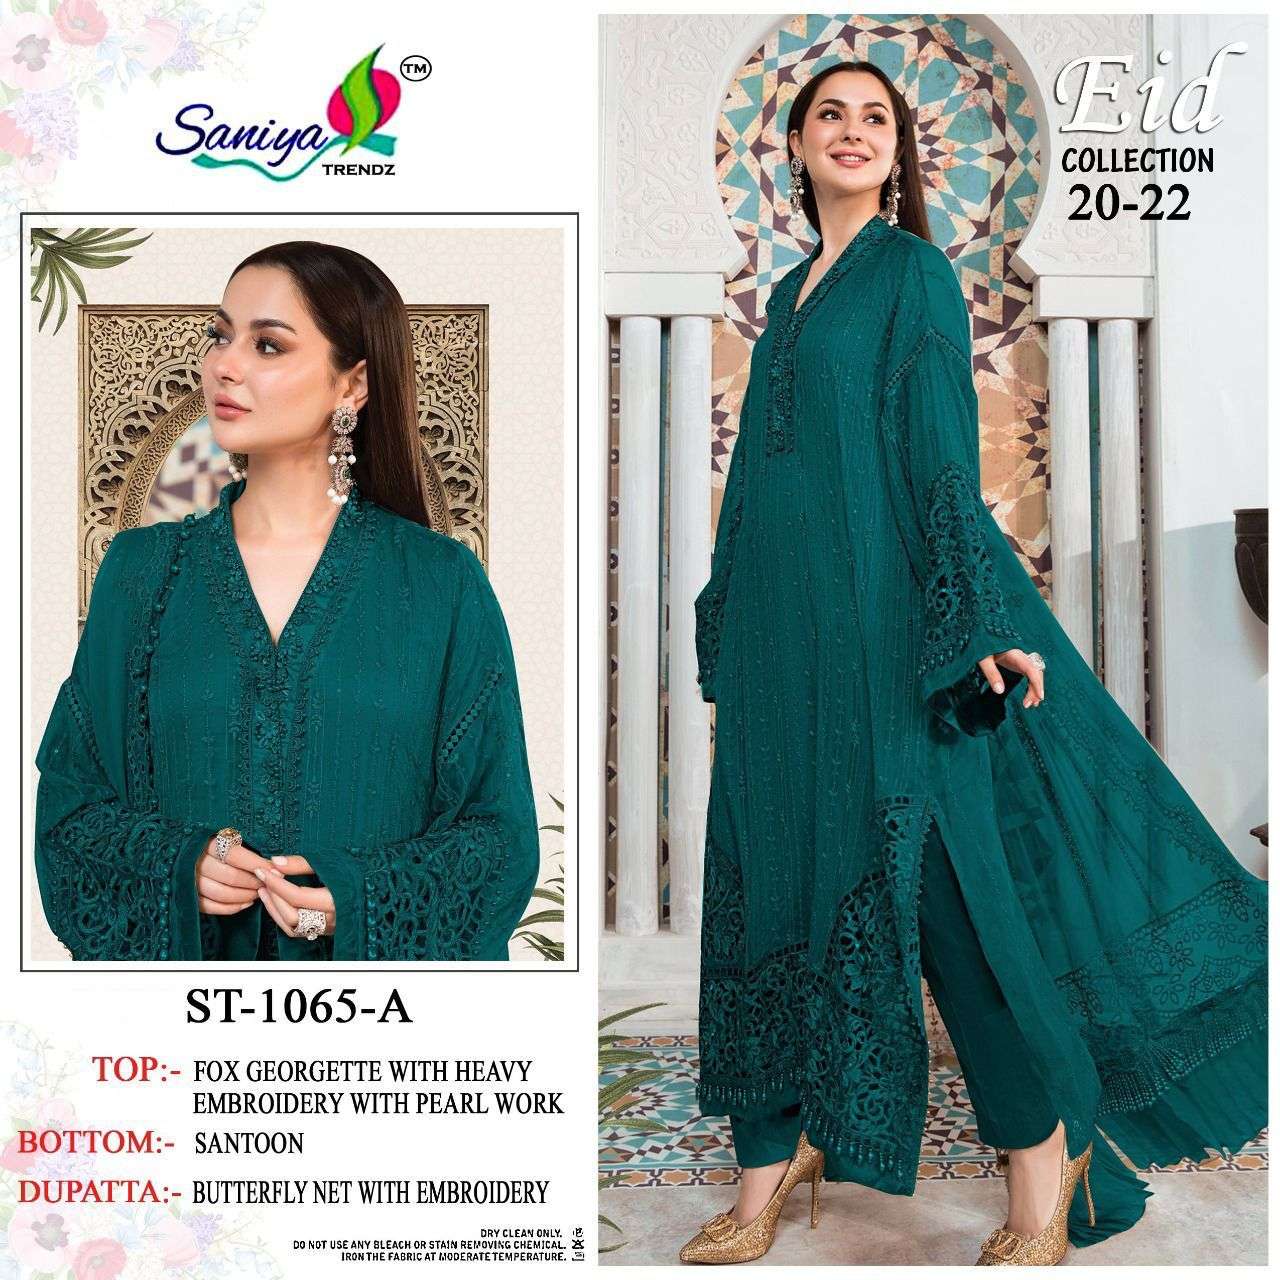 Saniya Trendz Eid Collection 20-22 ST-1065-A